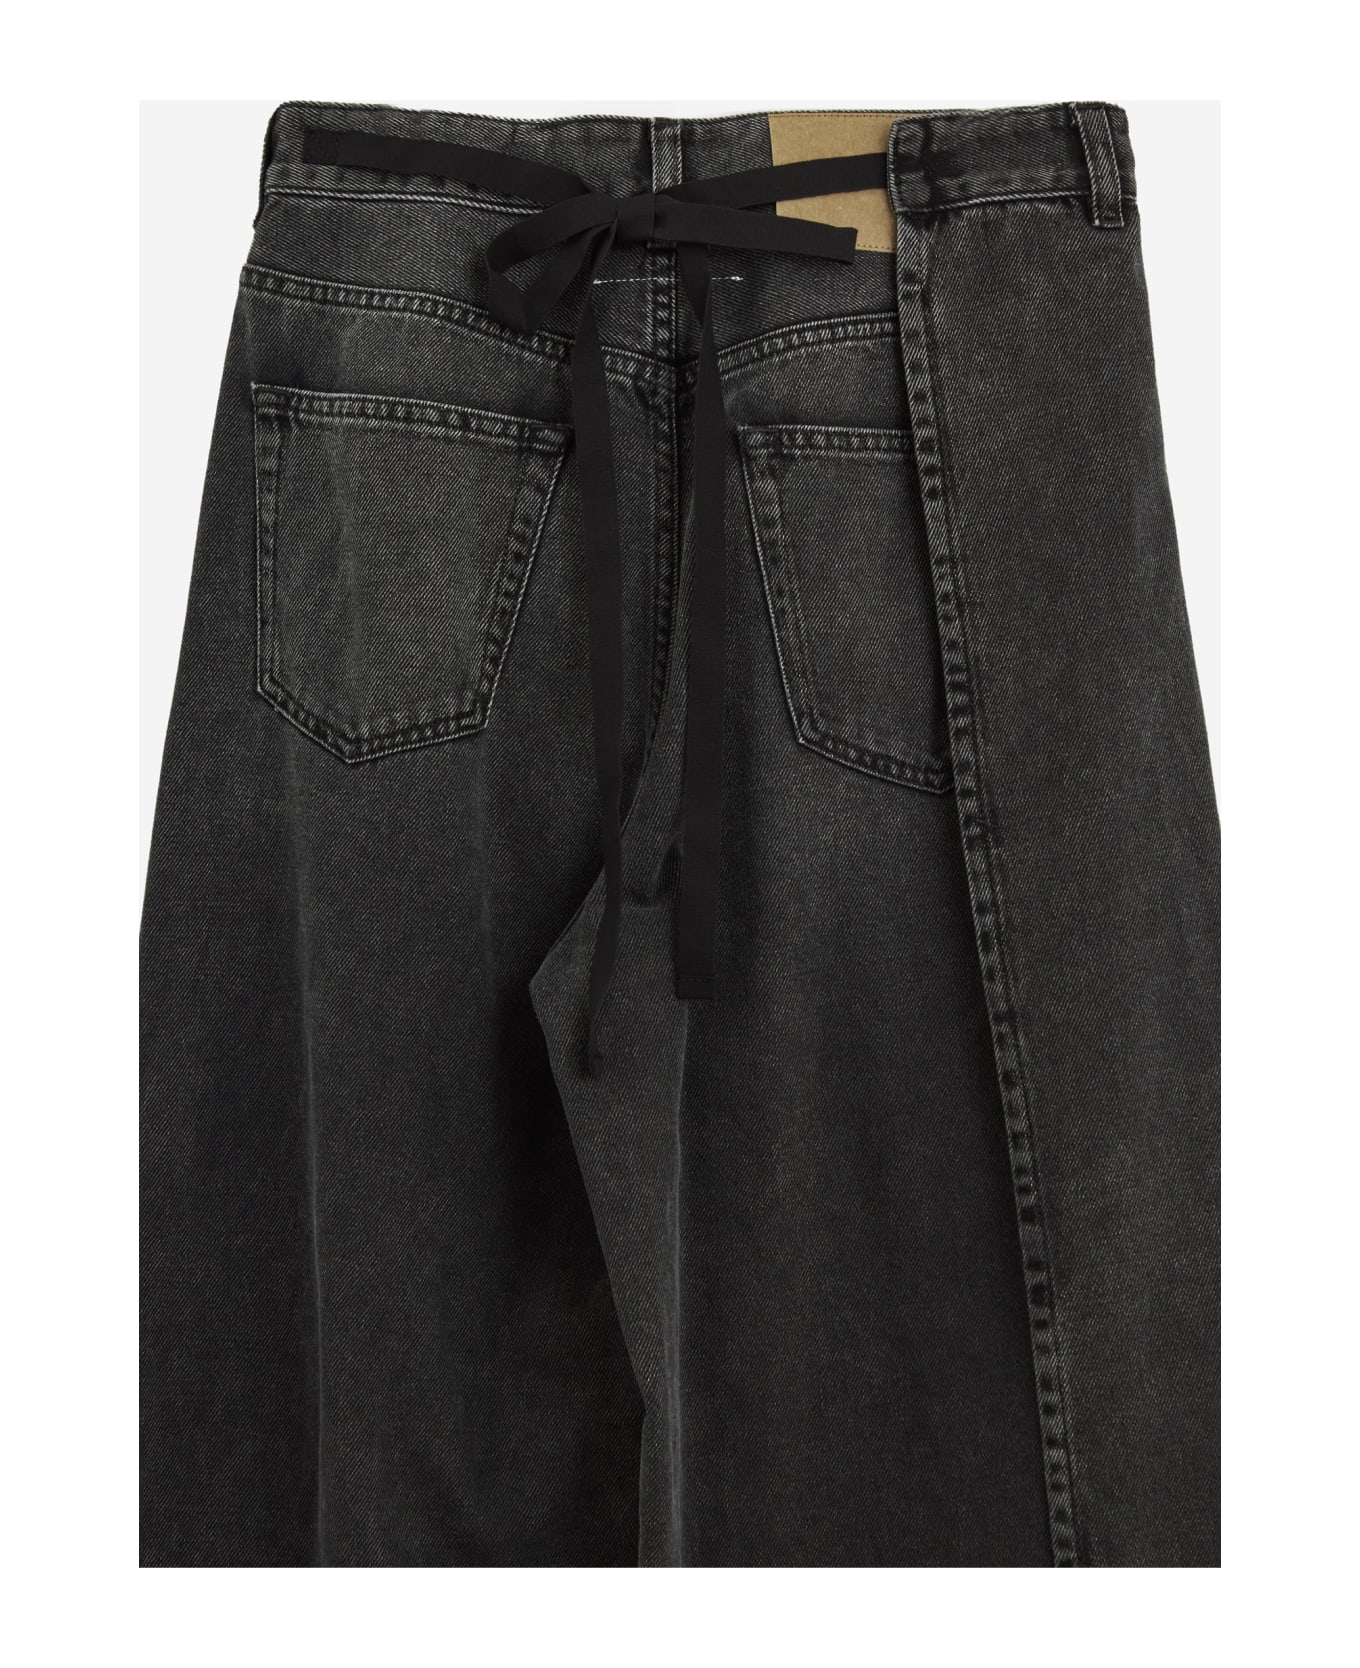 MM6 Maison Margiela 5 Pocket Jeans - GREY